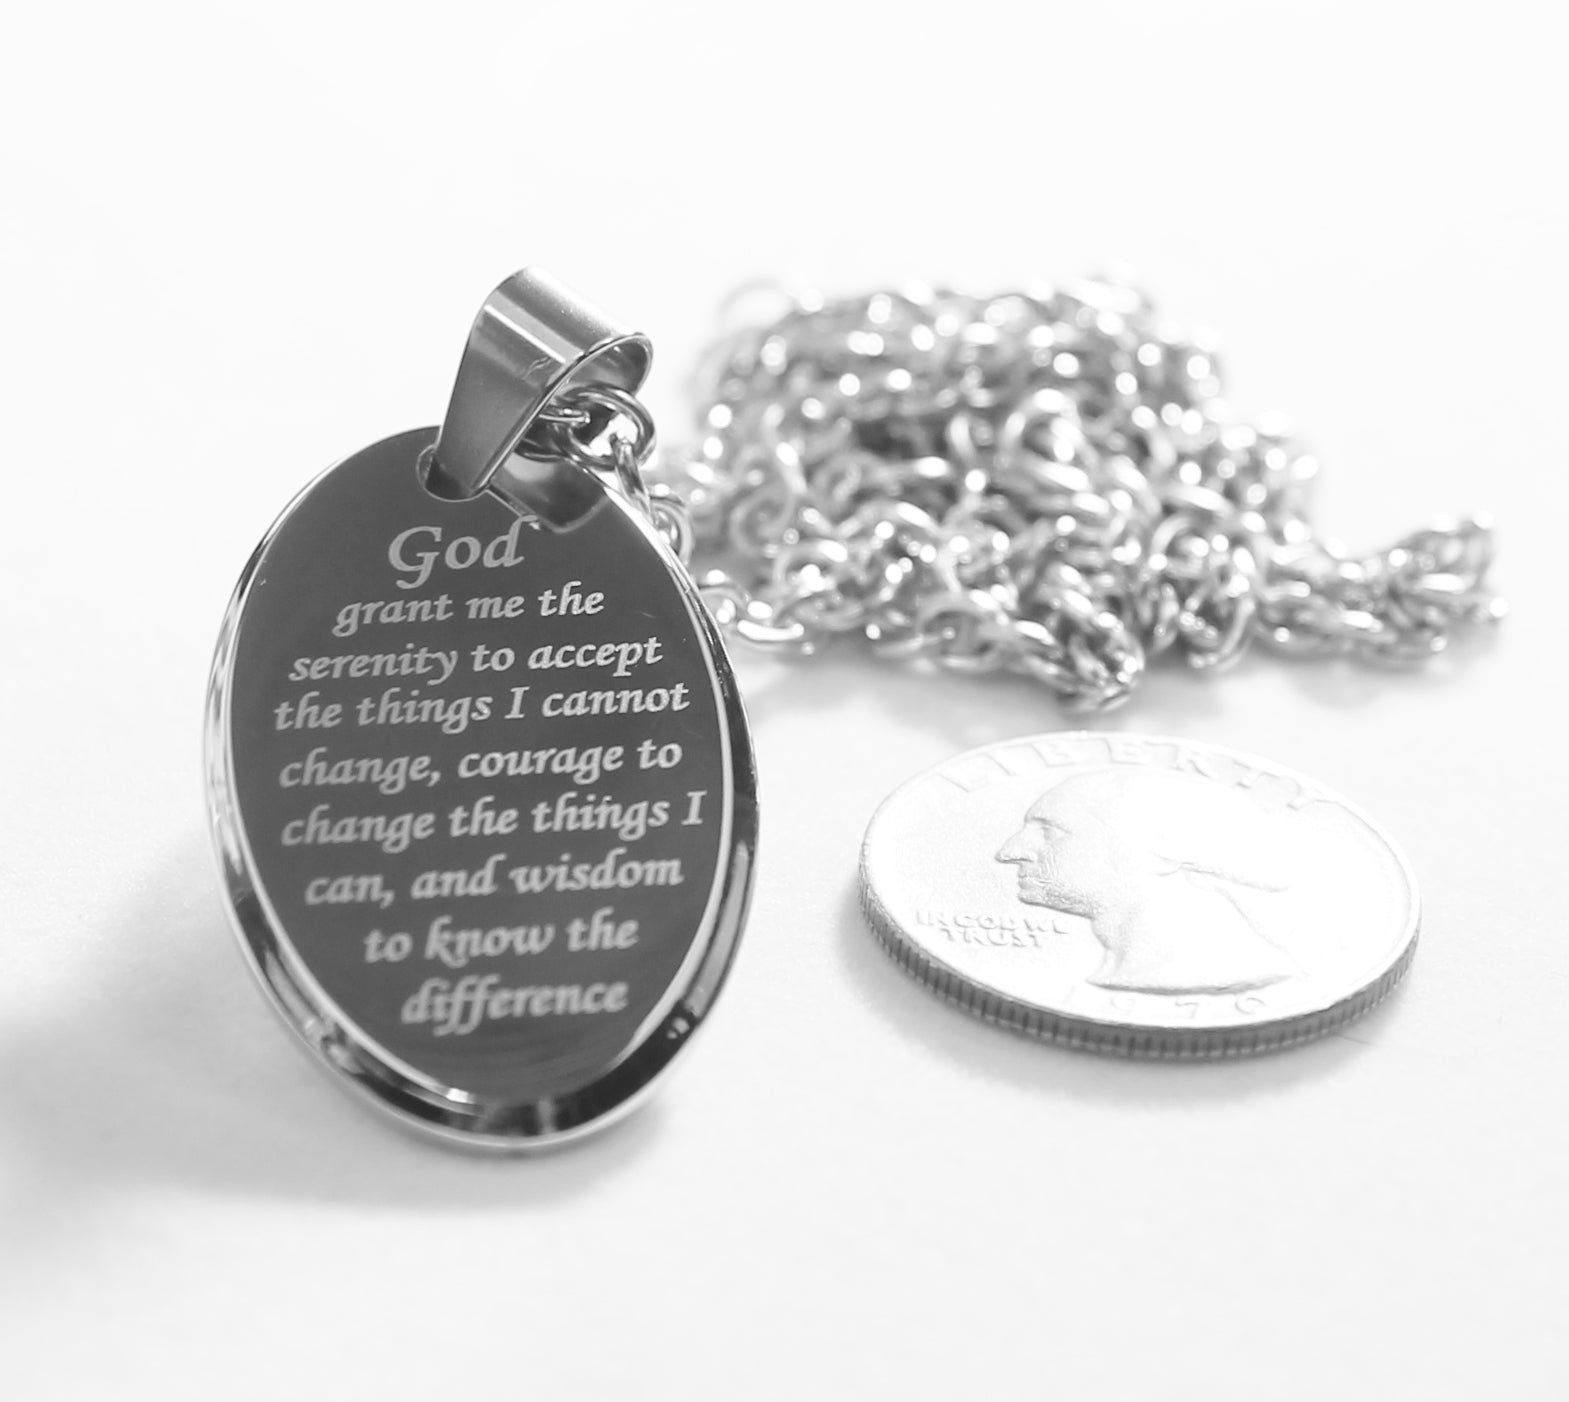 Serenity  Prayer  oval tag small 1 3/4” necklace pendant - Samstagsandmore